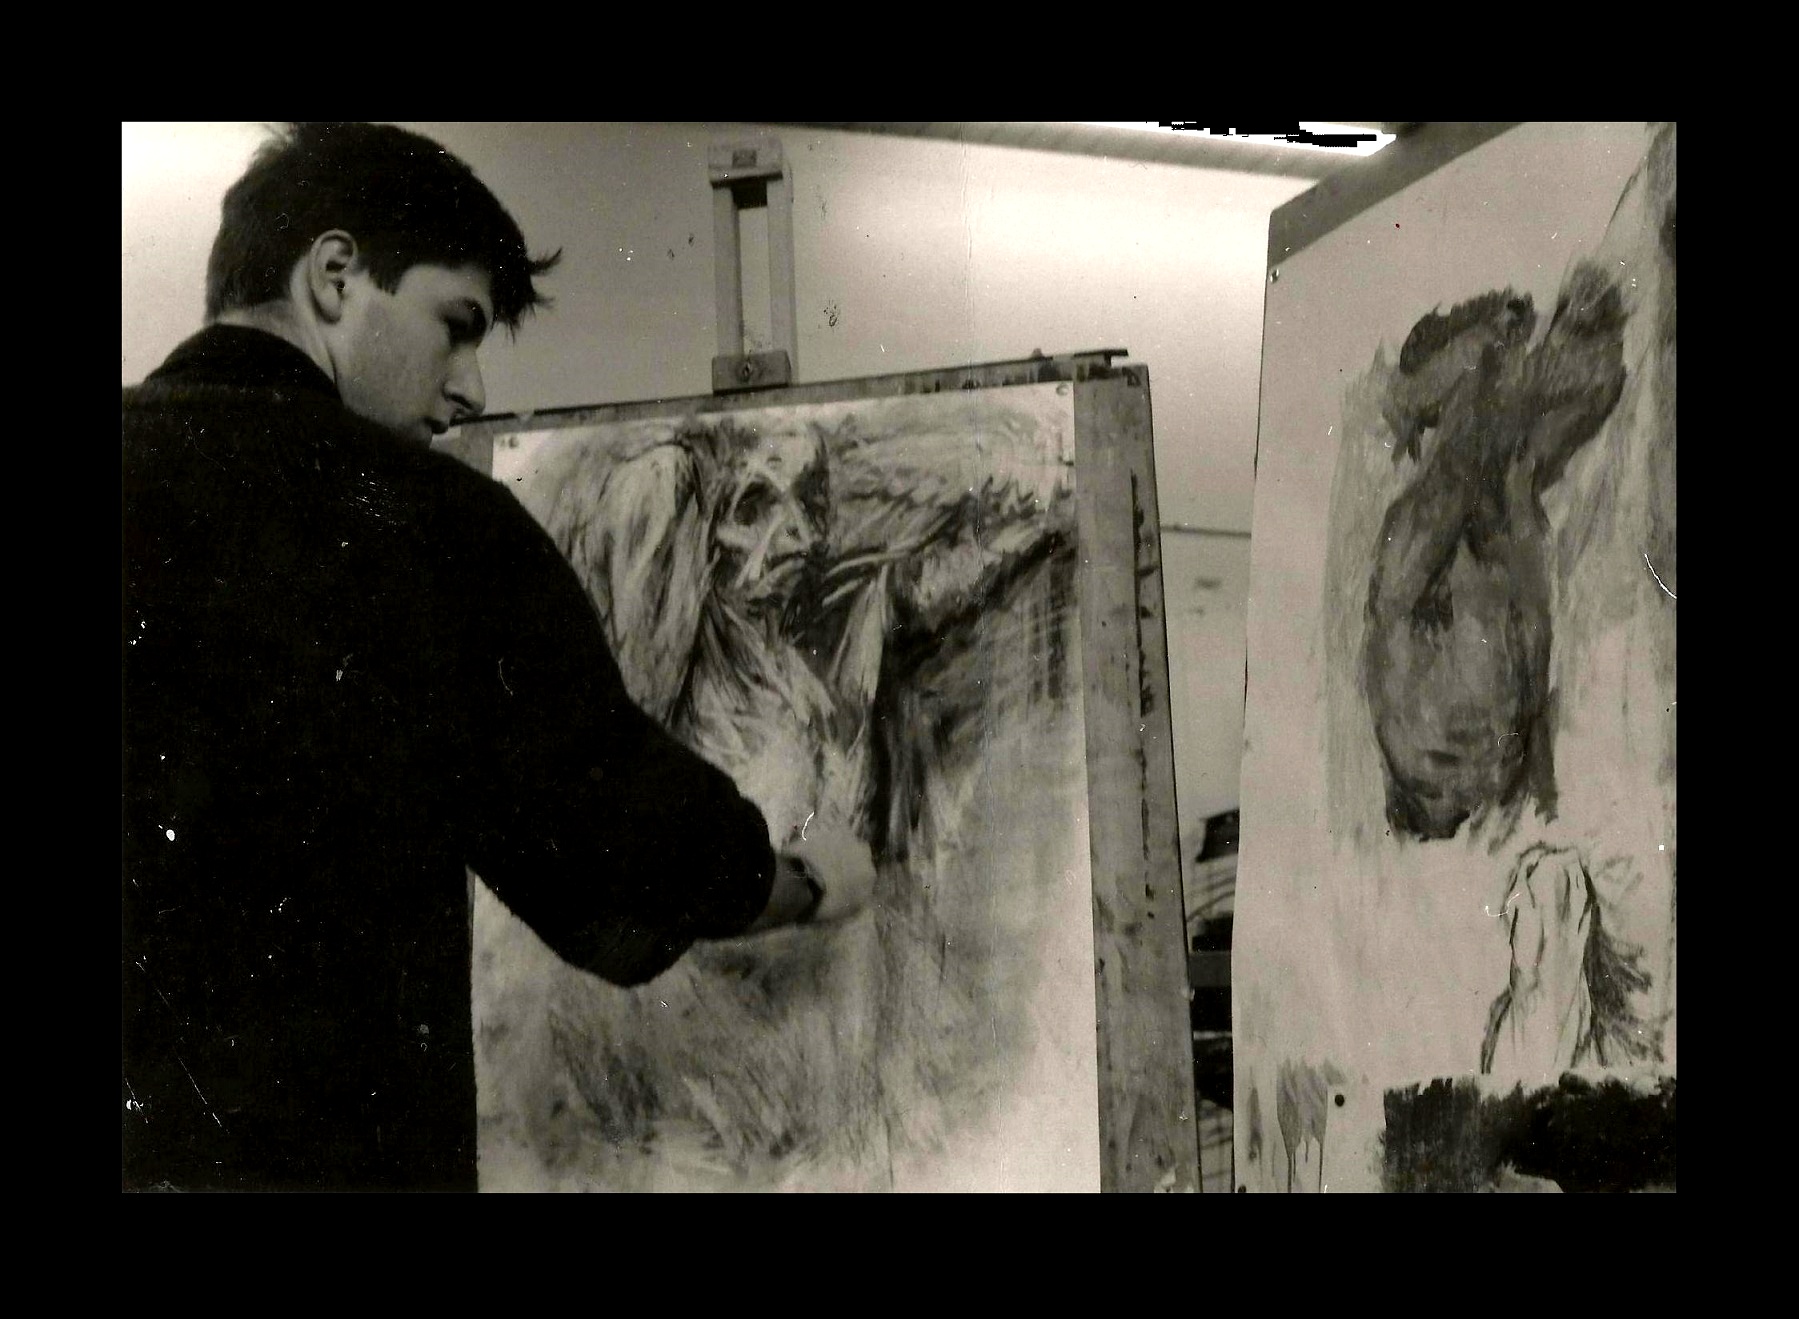  Life drawing, art school, 1986 